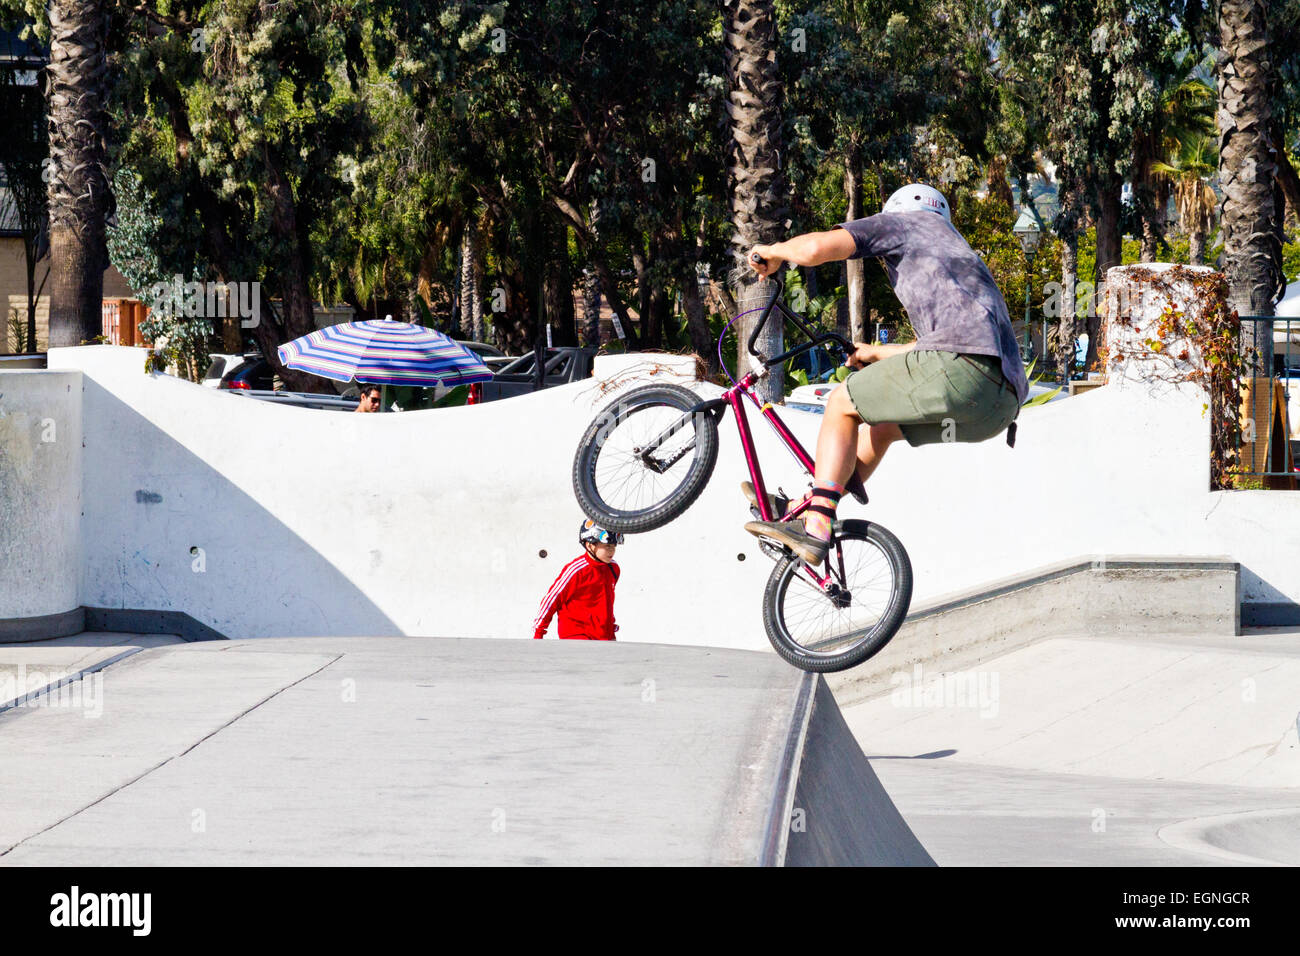 A boy performing a stunt with a bicycle at a skate park in Santa Barbara, California. Stock Photo